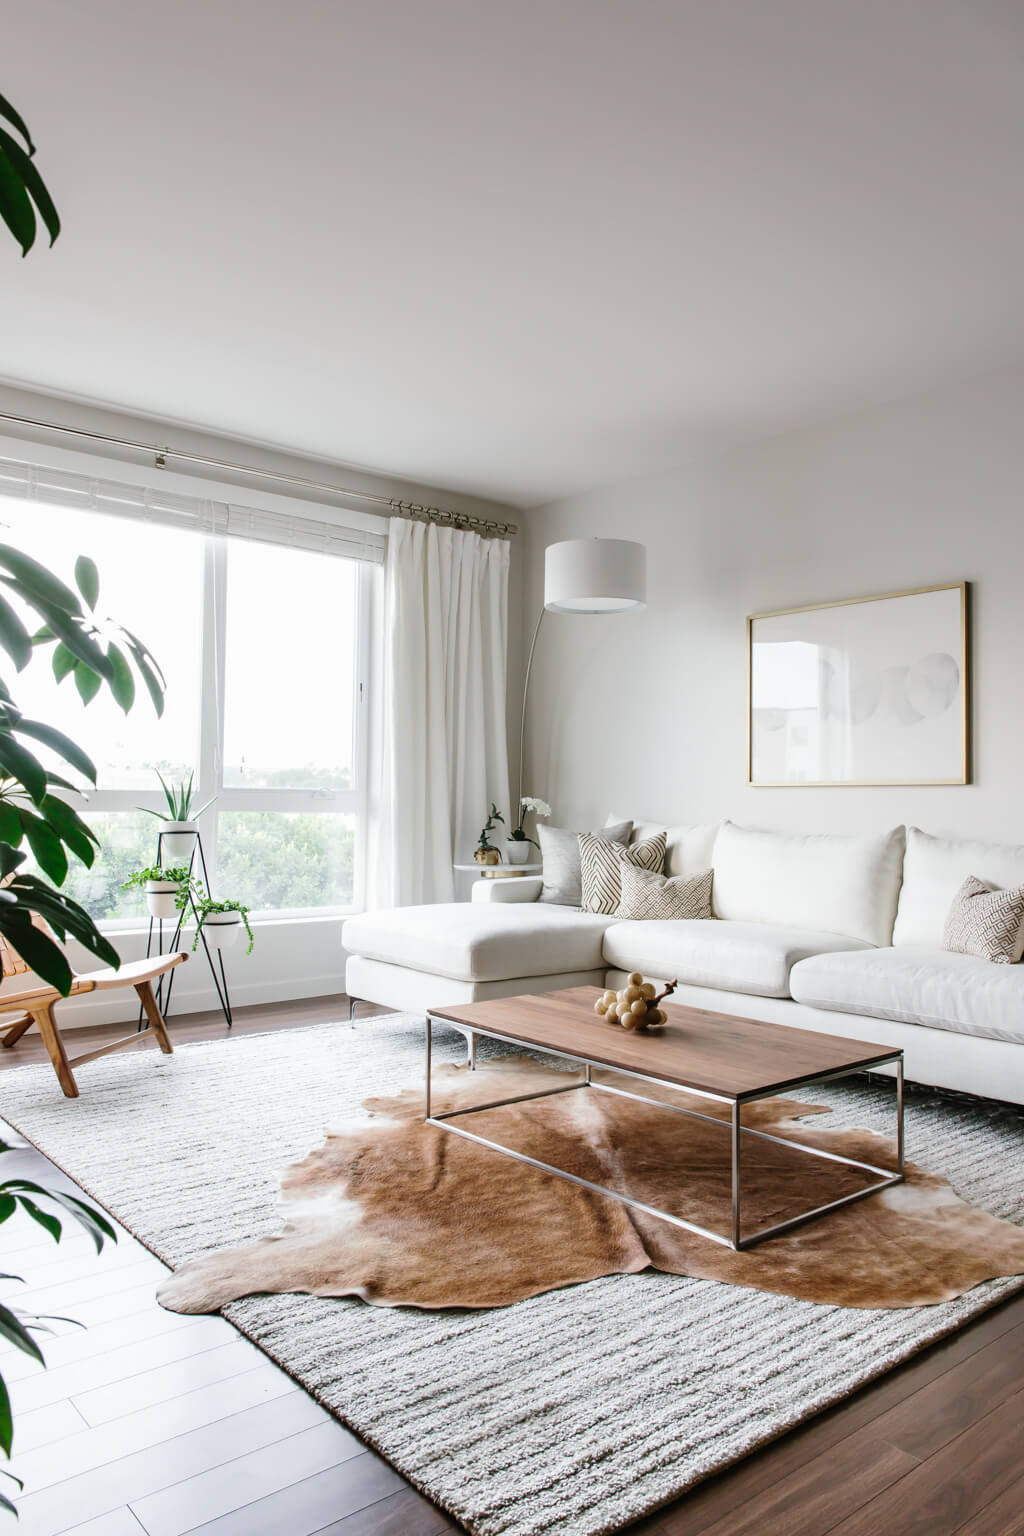 Minimalist Living Room Ideas
 Designing my Modern and Minimalist Living Room with